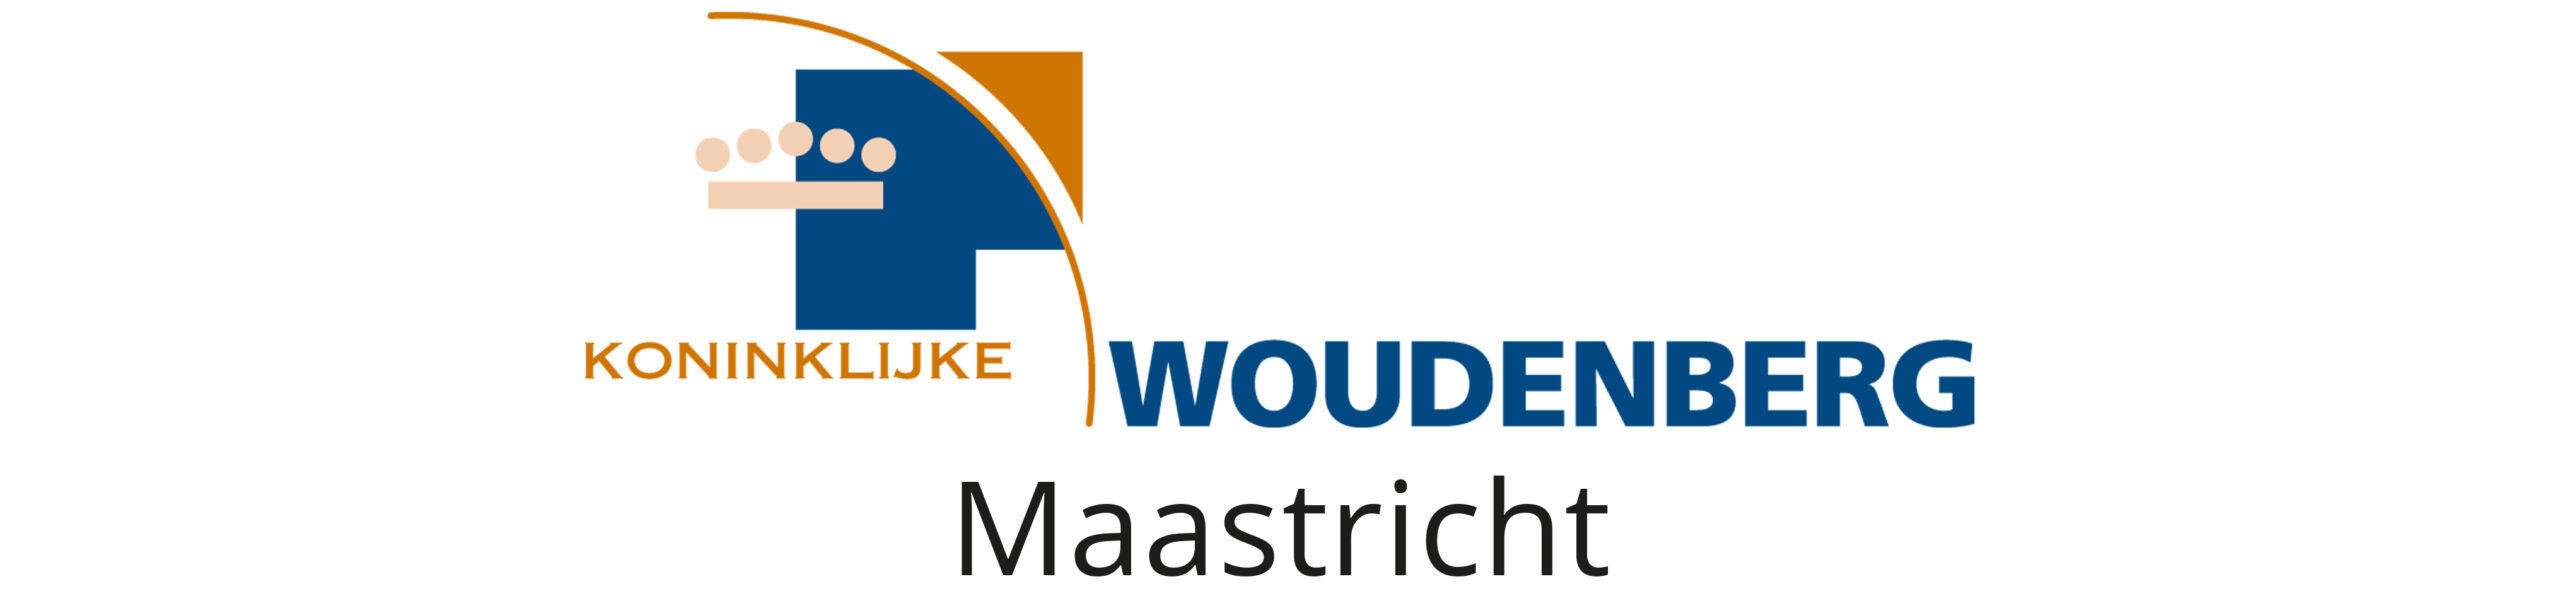 Konlinklijke Woudenberg Maastricht